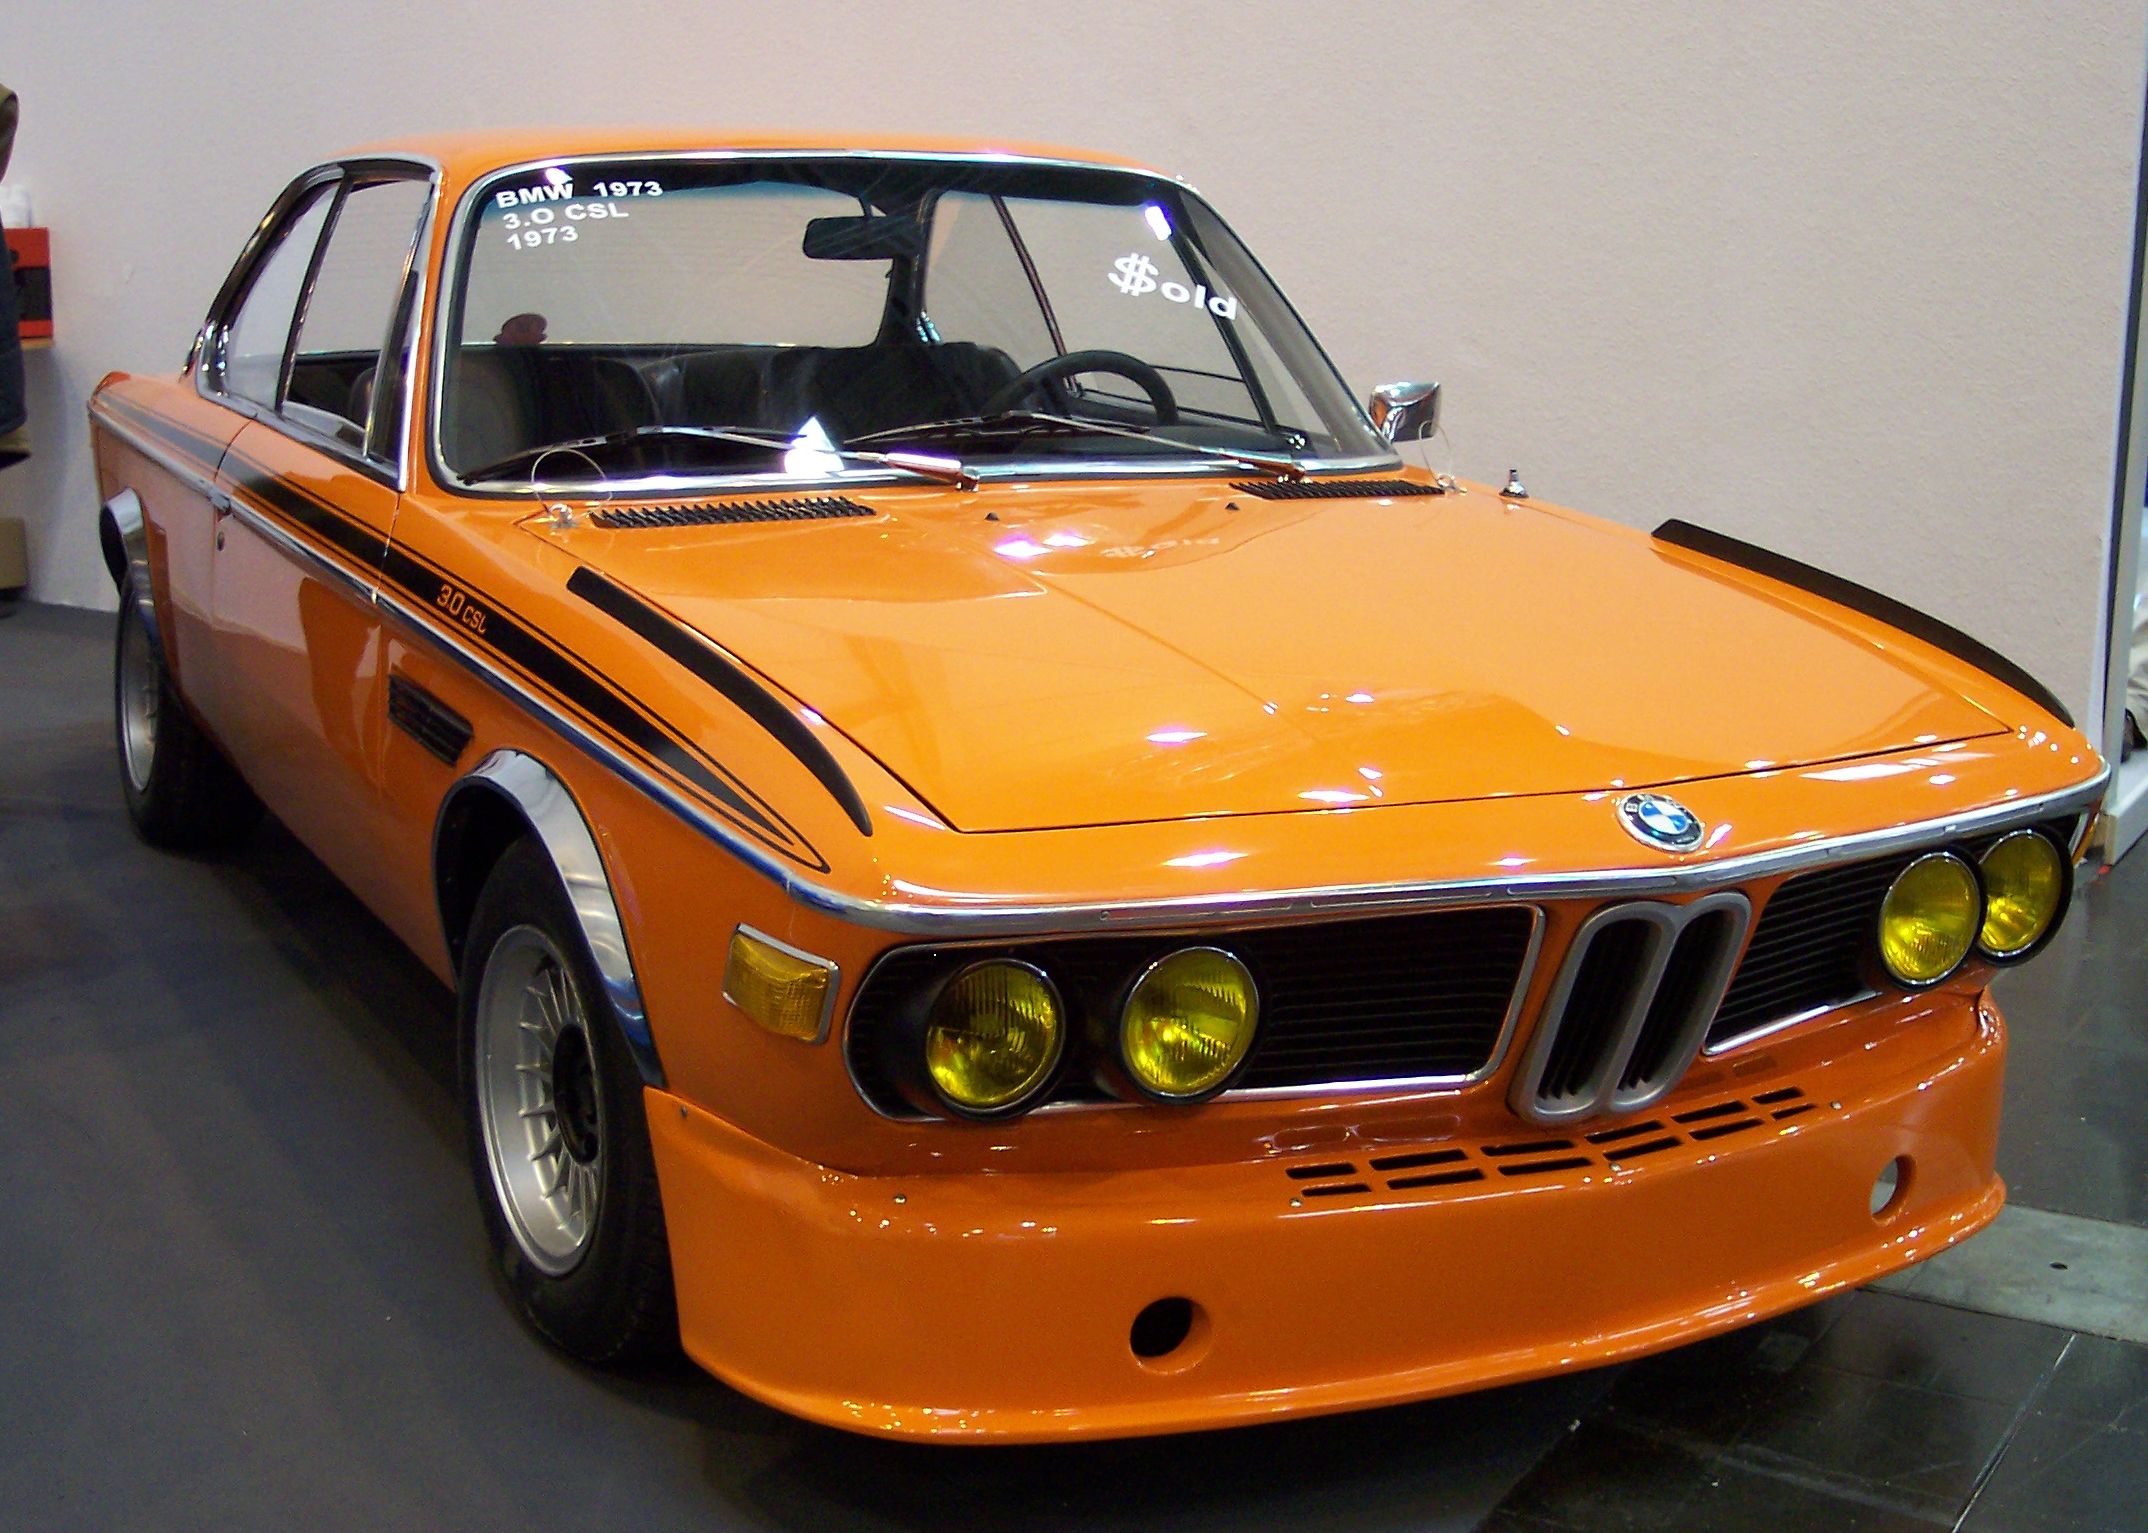 BMW 30 CSL